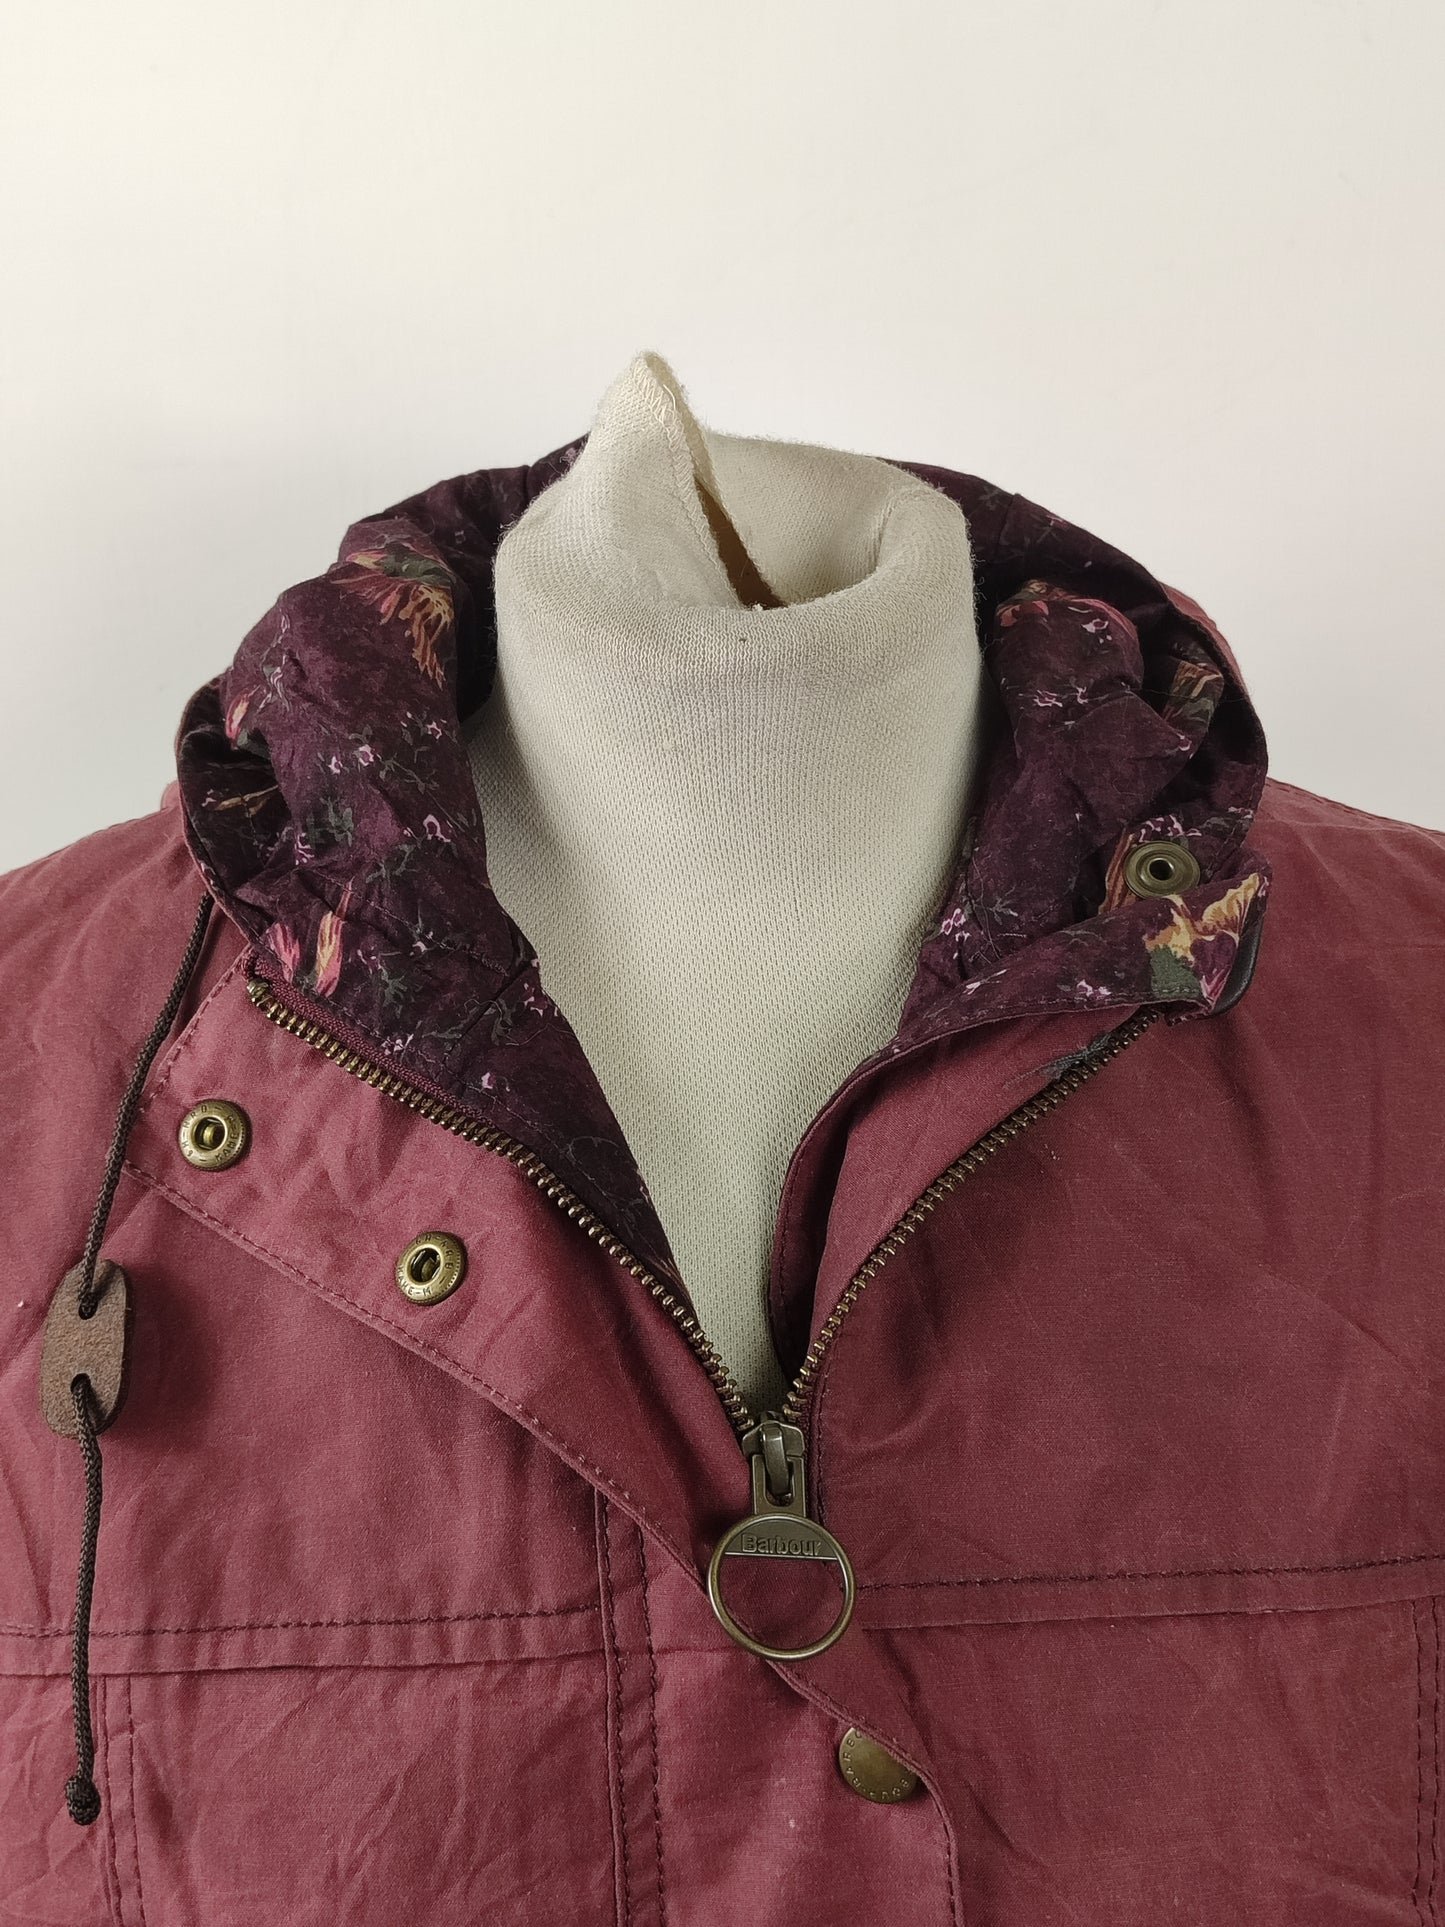 Giacca Barbour da donna rosa cerato uk14 tg44 -Lady Vintage Retail Vintage Durham Uk14 Medium